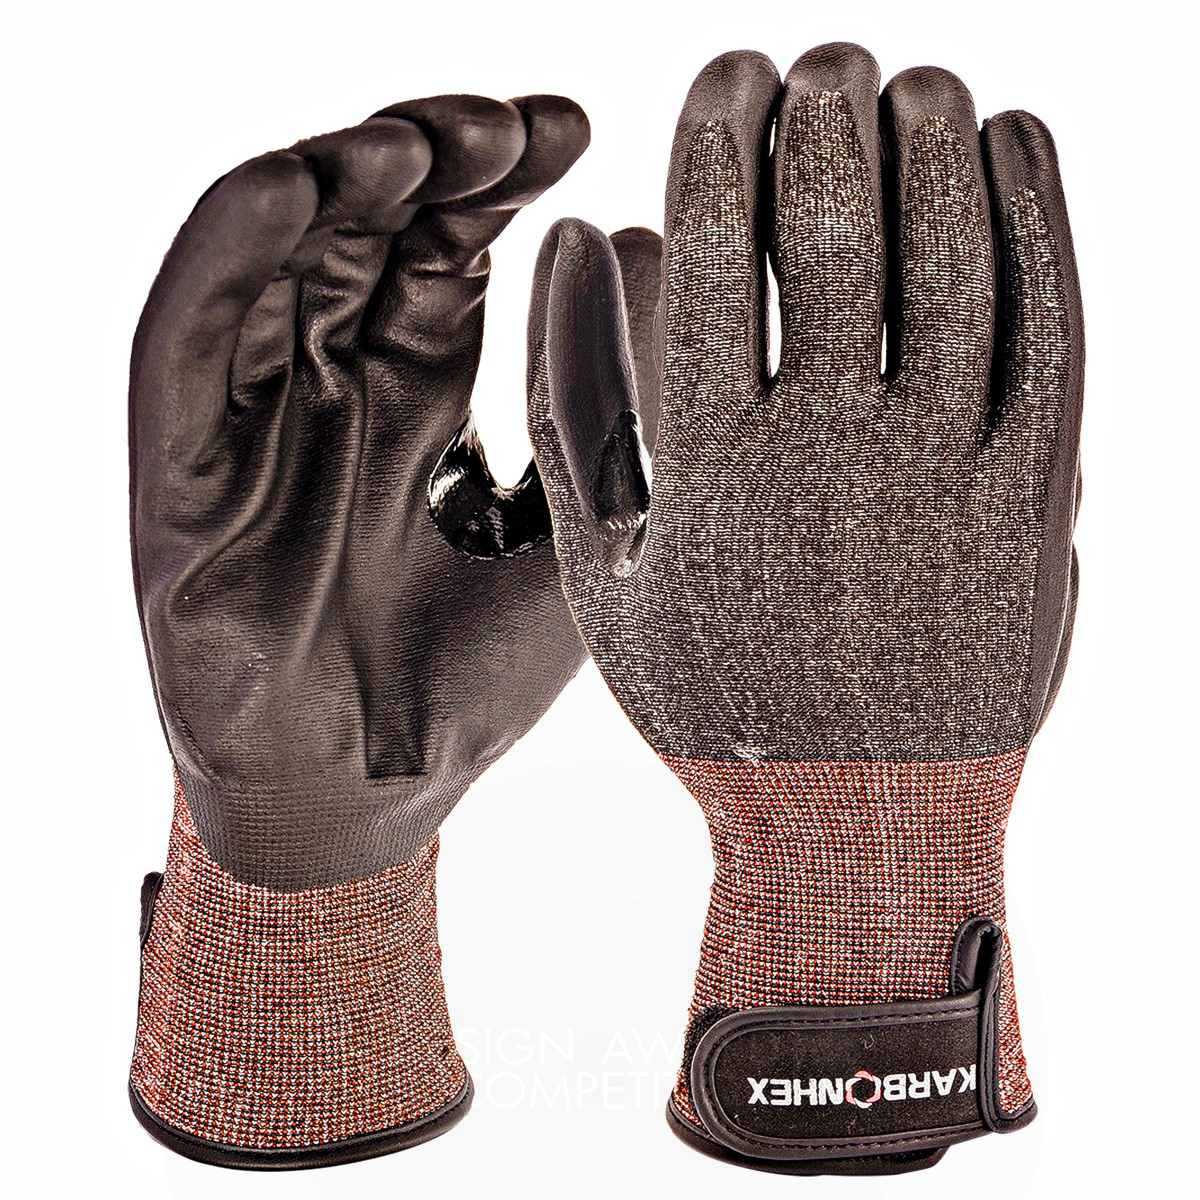 OBSIDIAN KX-10 Cut Resistant Glove by Jason Sparrow